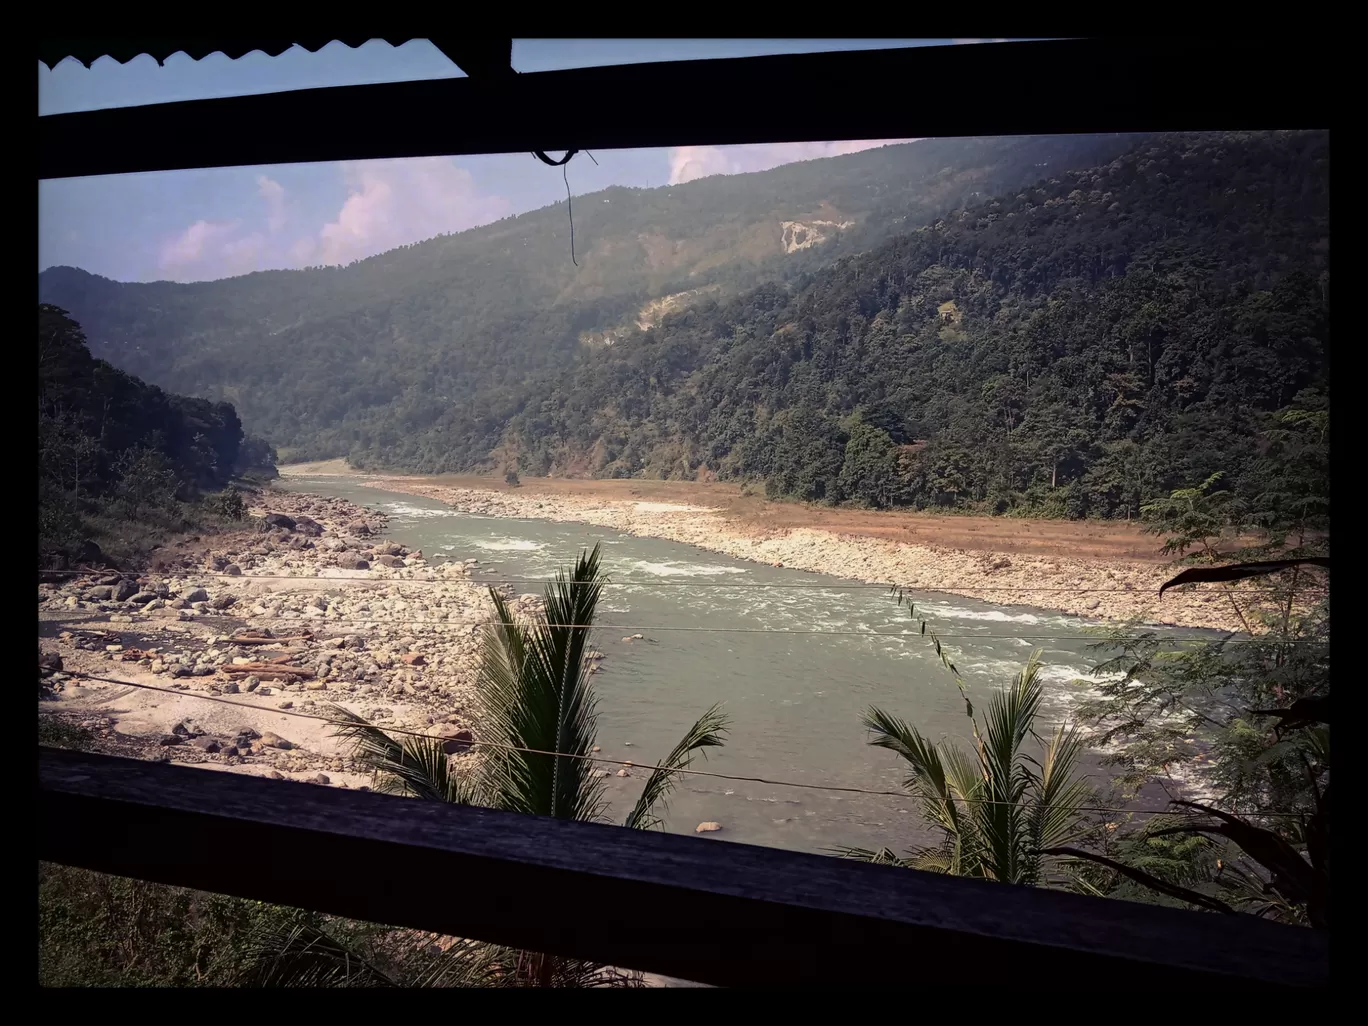 Photo of Gangtok By Thetravelcoholic